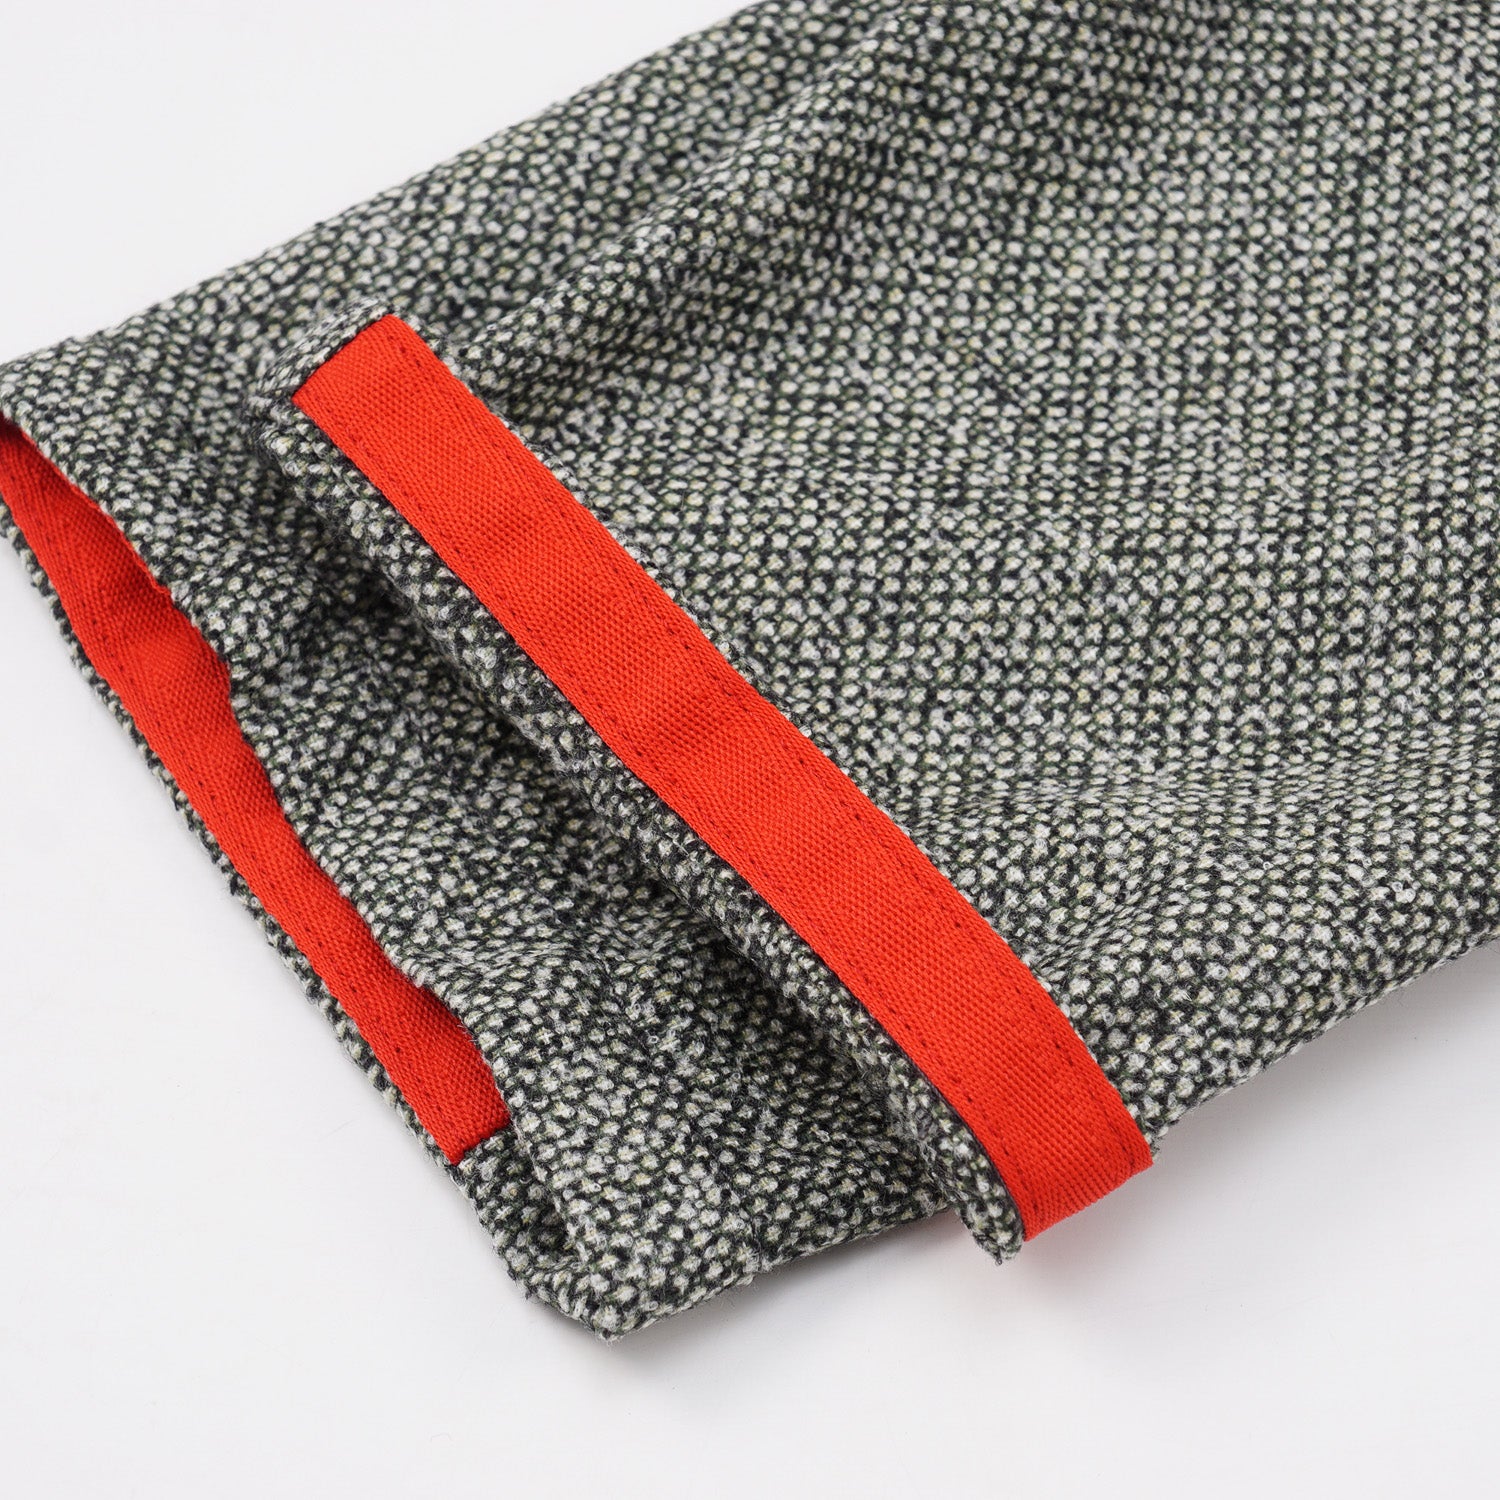 Kiton Slim Fit Five-Pocket Boucle Wool Pants - Top Shelf Apparel